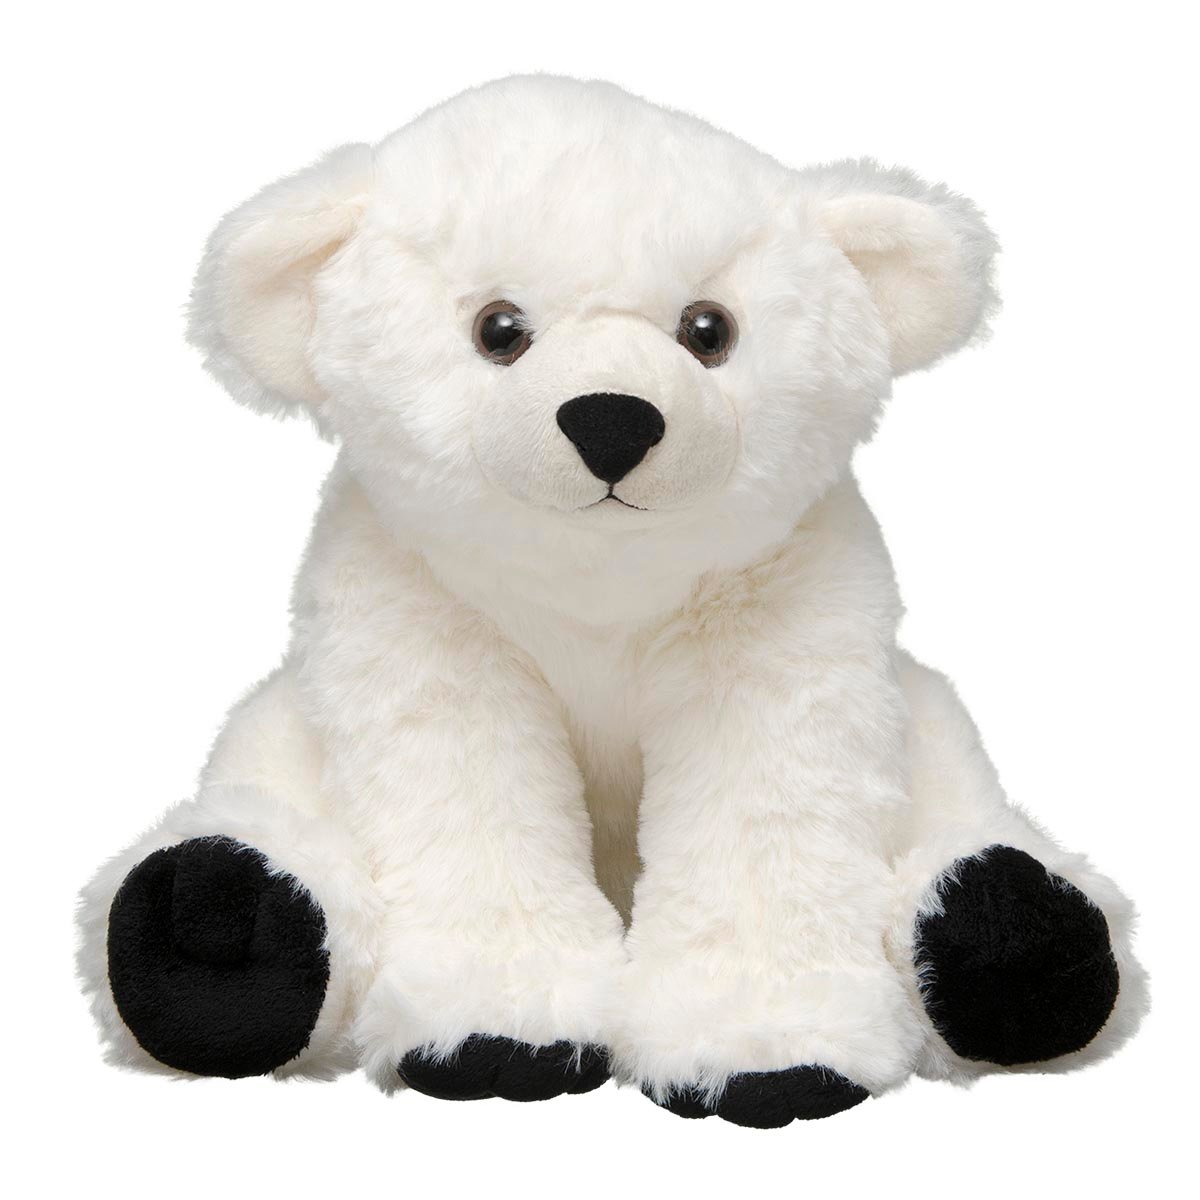 Adopt a Polar Bear  Symbolic Adoptions from WWF